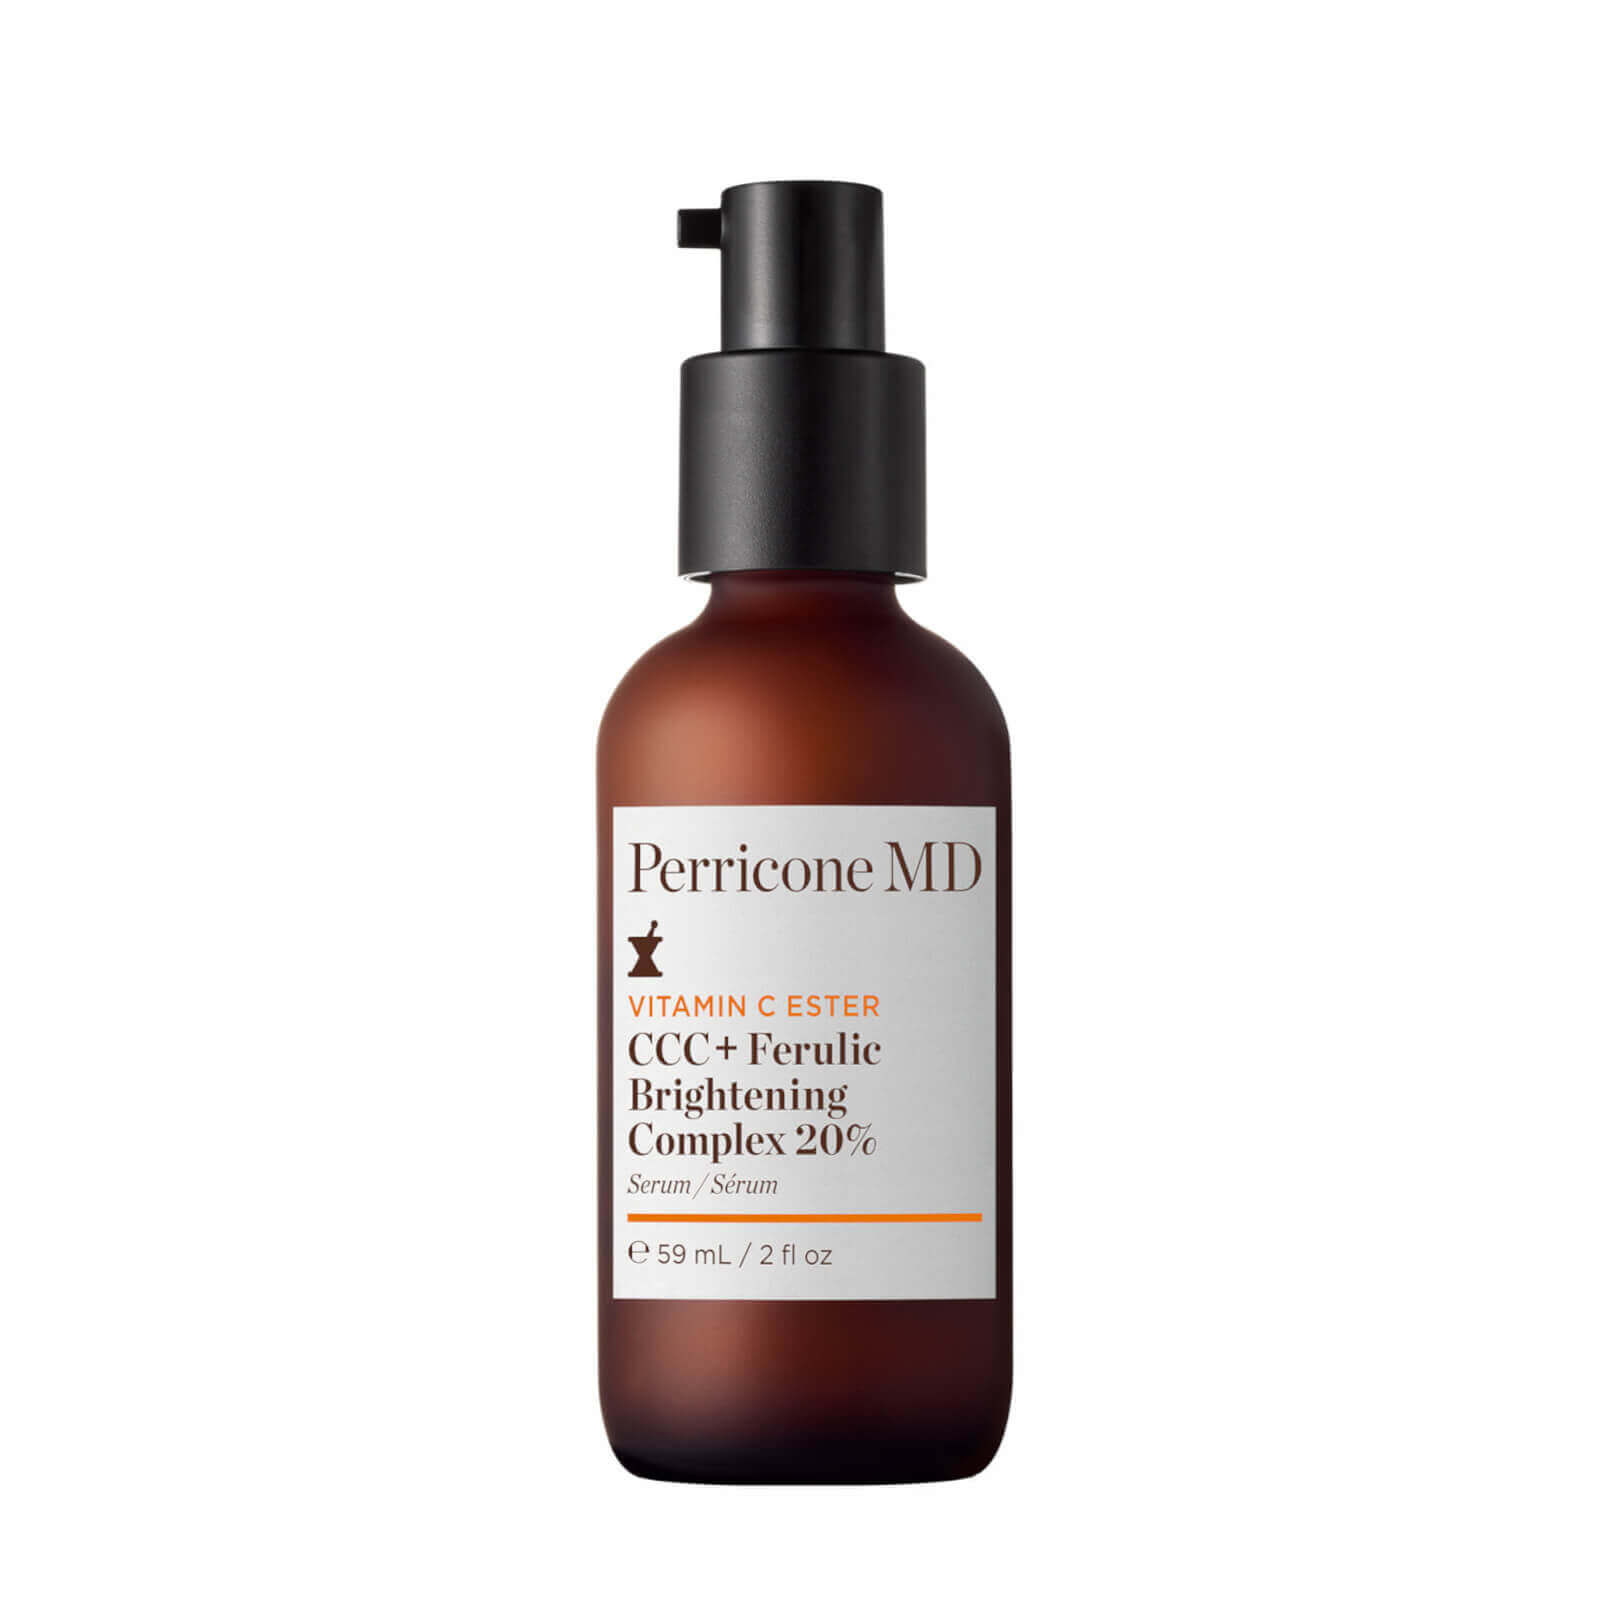 Perricone MD Vitamin C Ester CCC and Ferulic Brightening Complex 20% 59ml